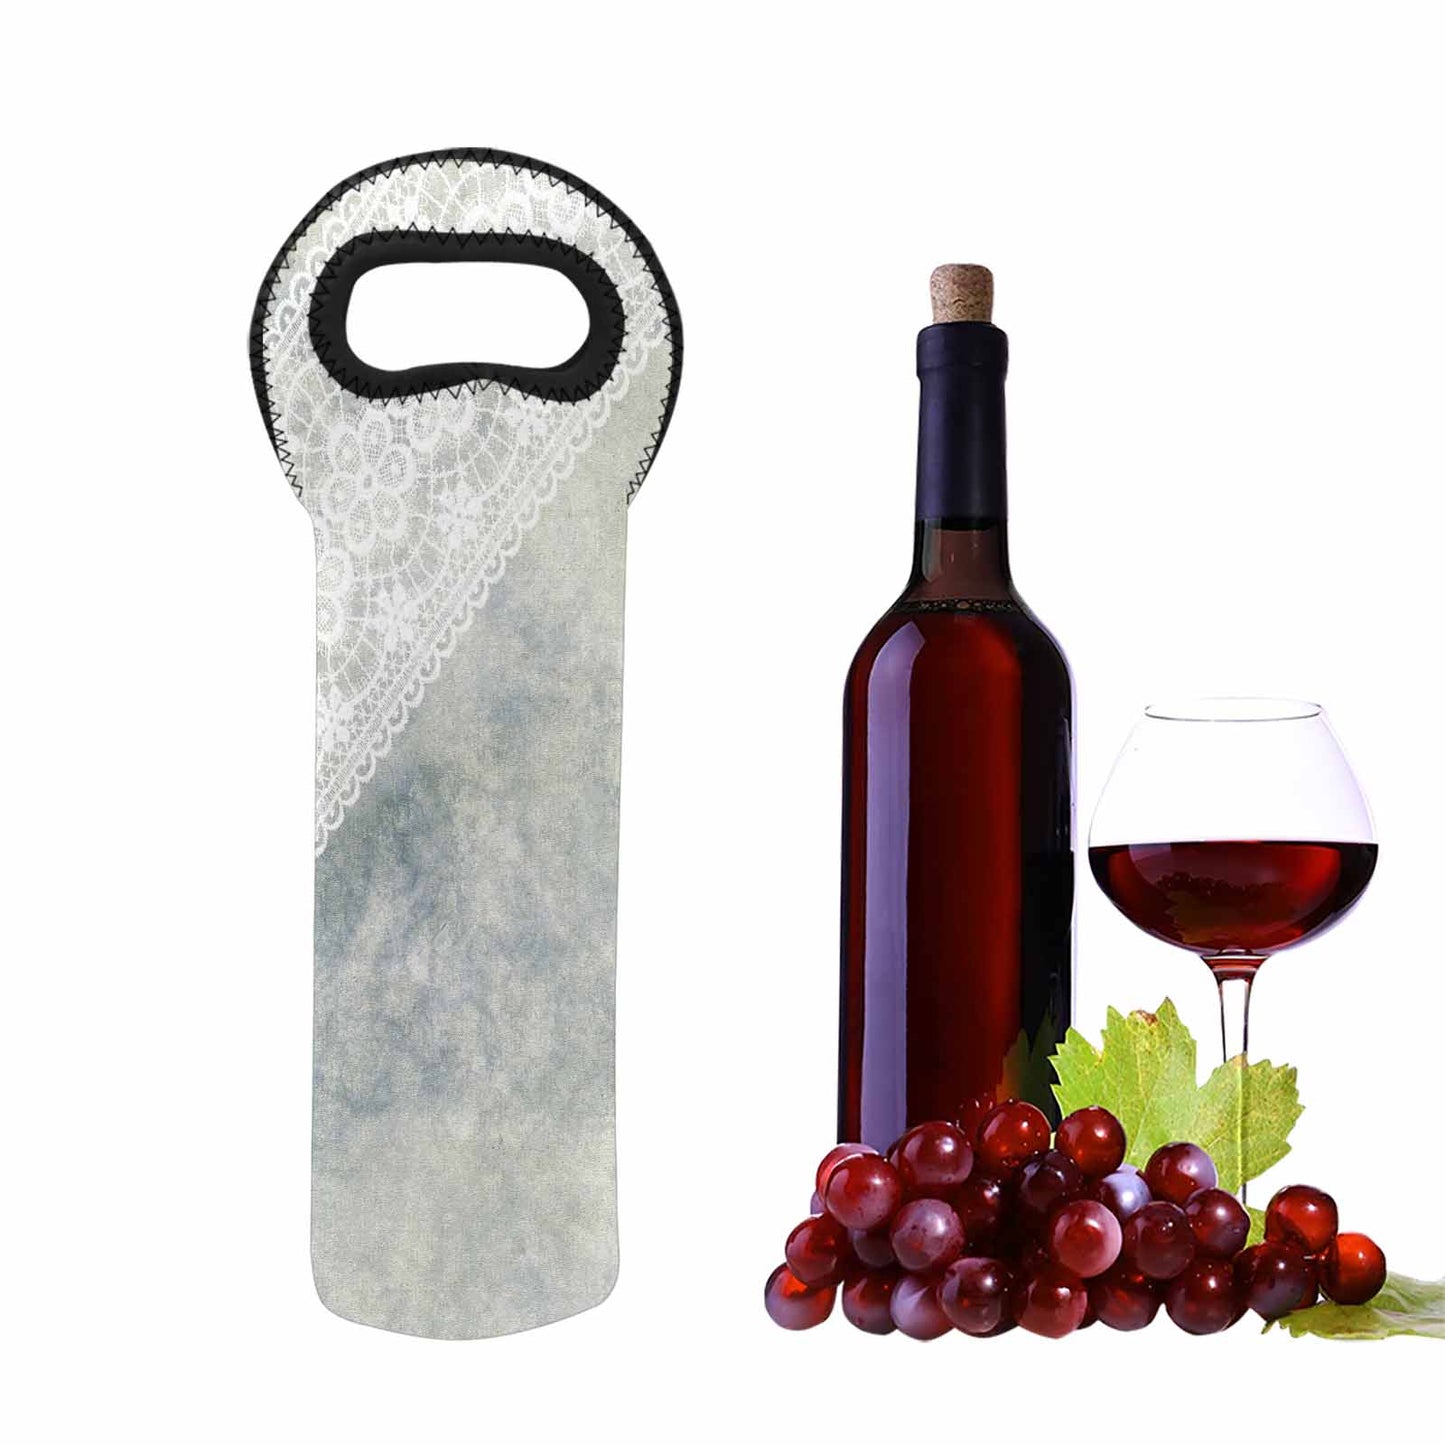 Victorian Lace 1 bottle wine bag, design 36